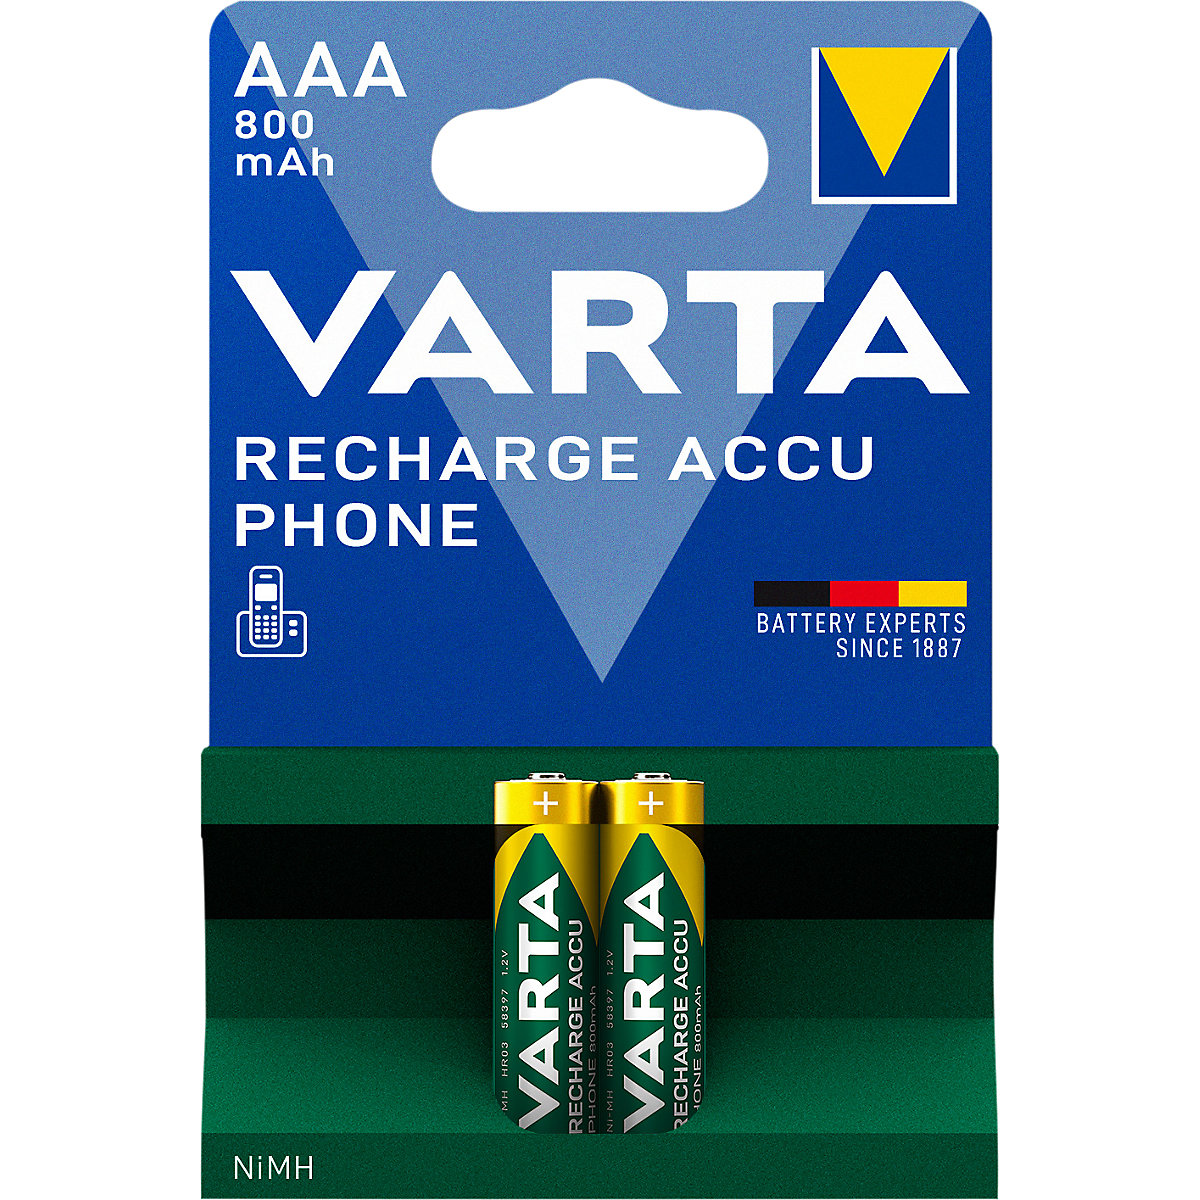 Phone battery, rechargeable - VARTA